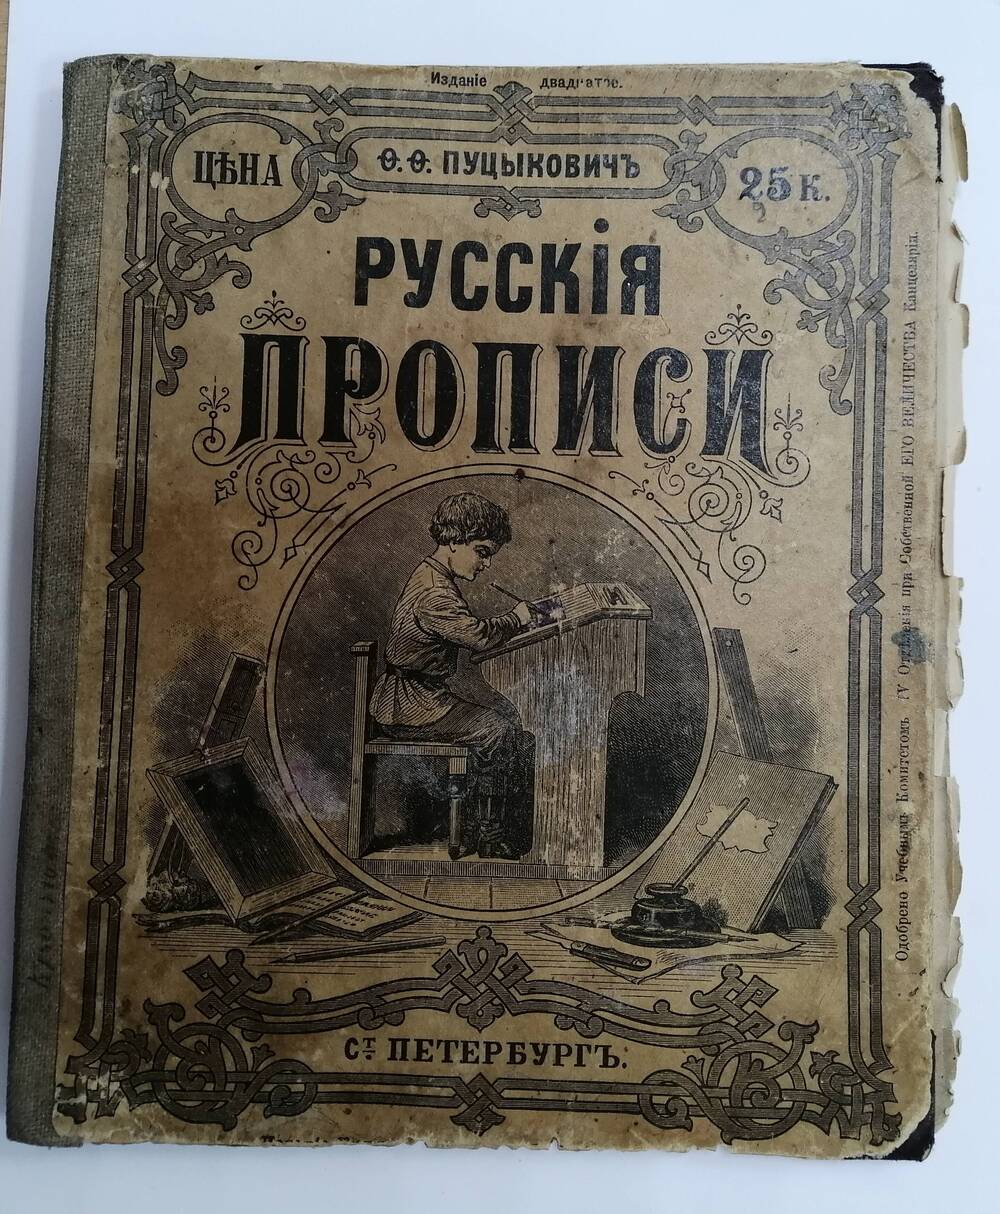 Книга РУССКИЕ ПРОПИСИ  О. О. Пуцыкович